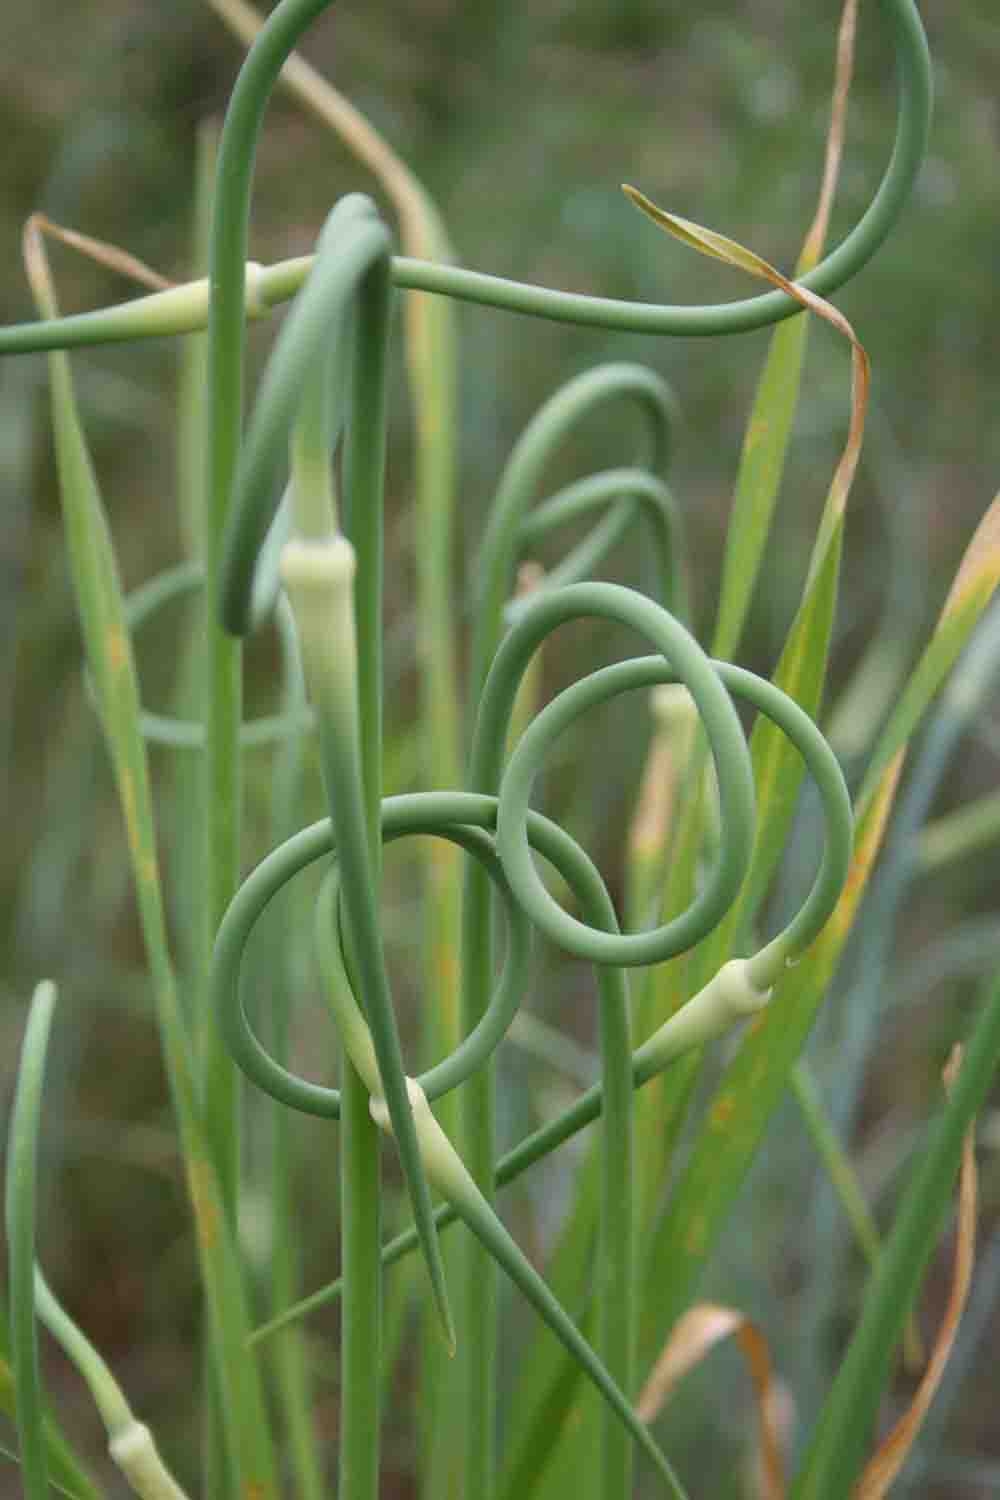 Allium sativum var. ophioscorodon